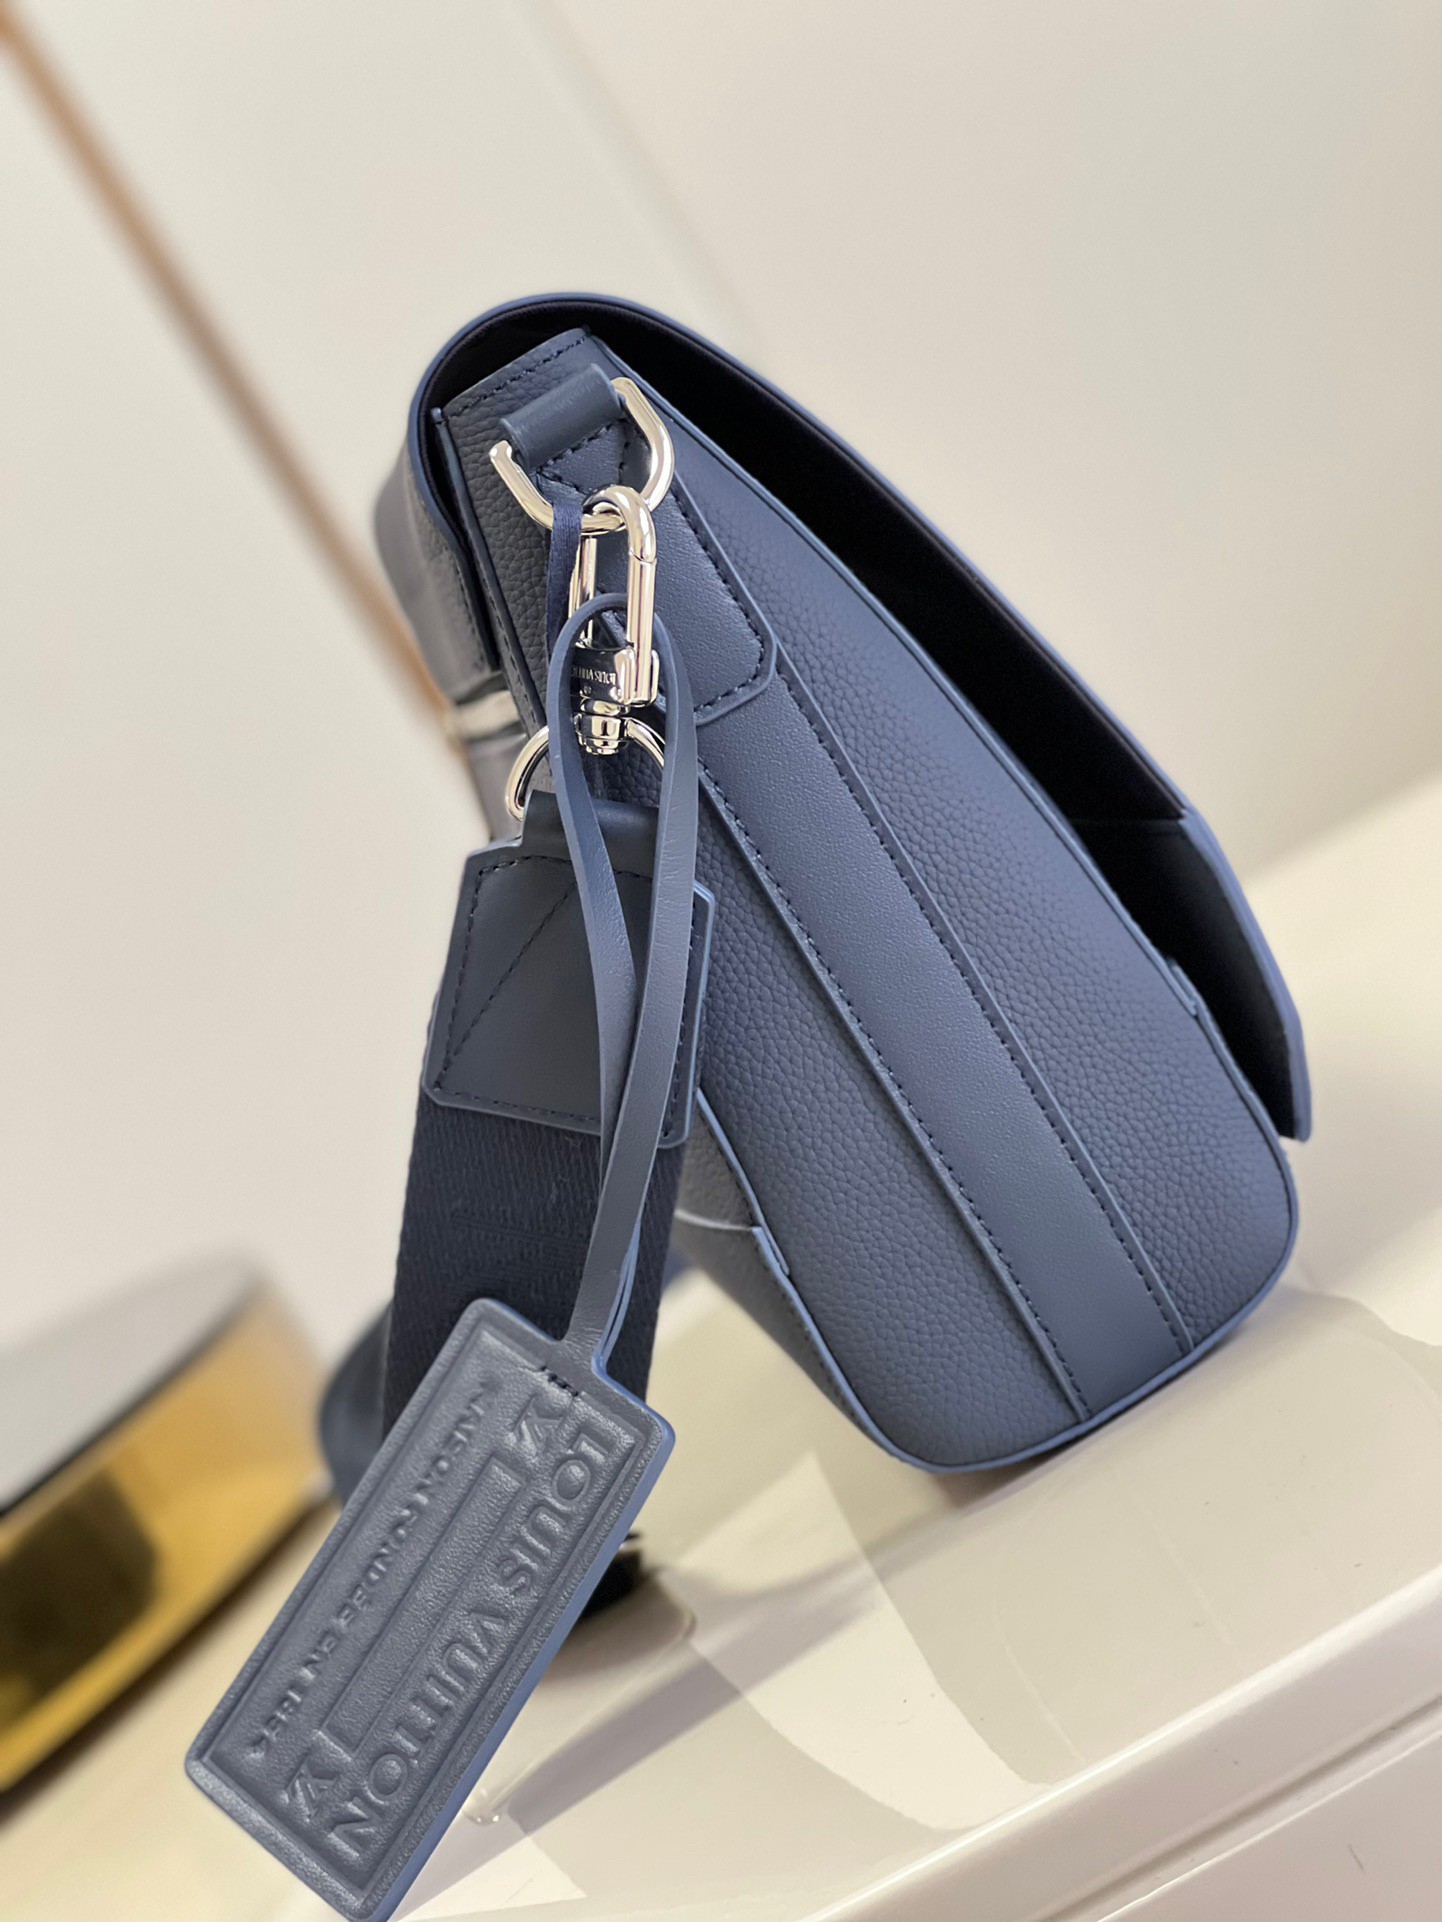 Louis Vuitton Blue Leather Aerogram Takeoff Messenger Bag Louis Vuitton